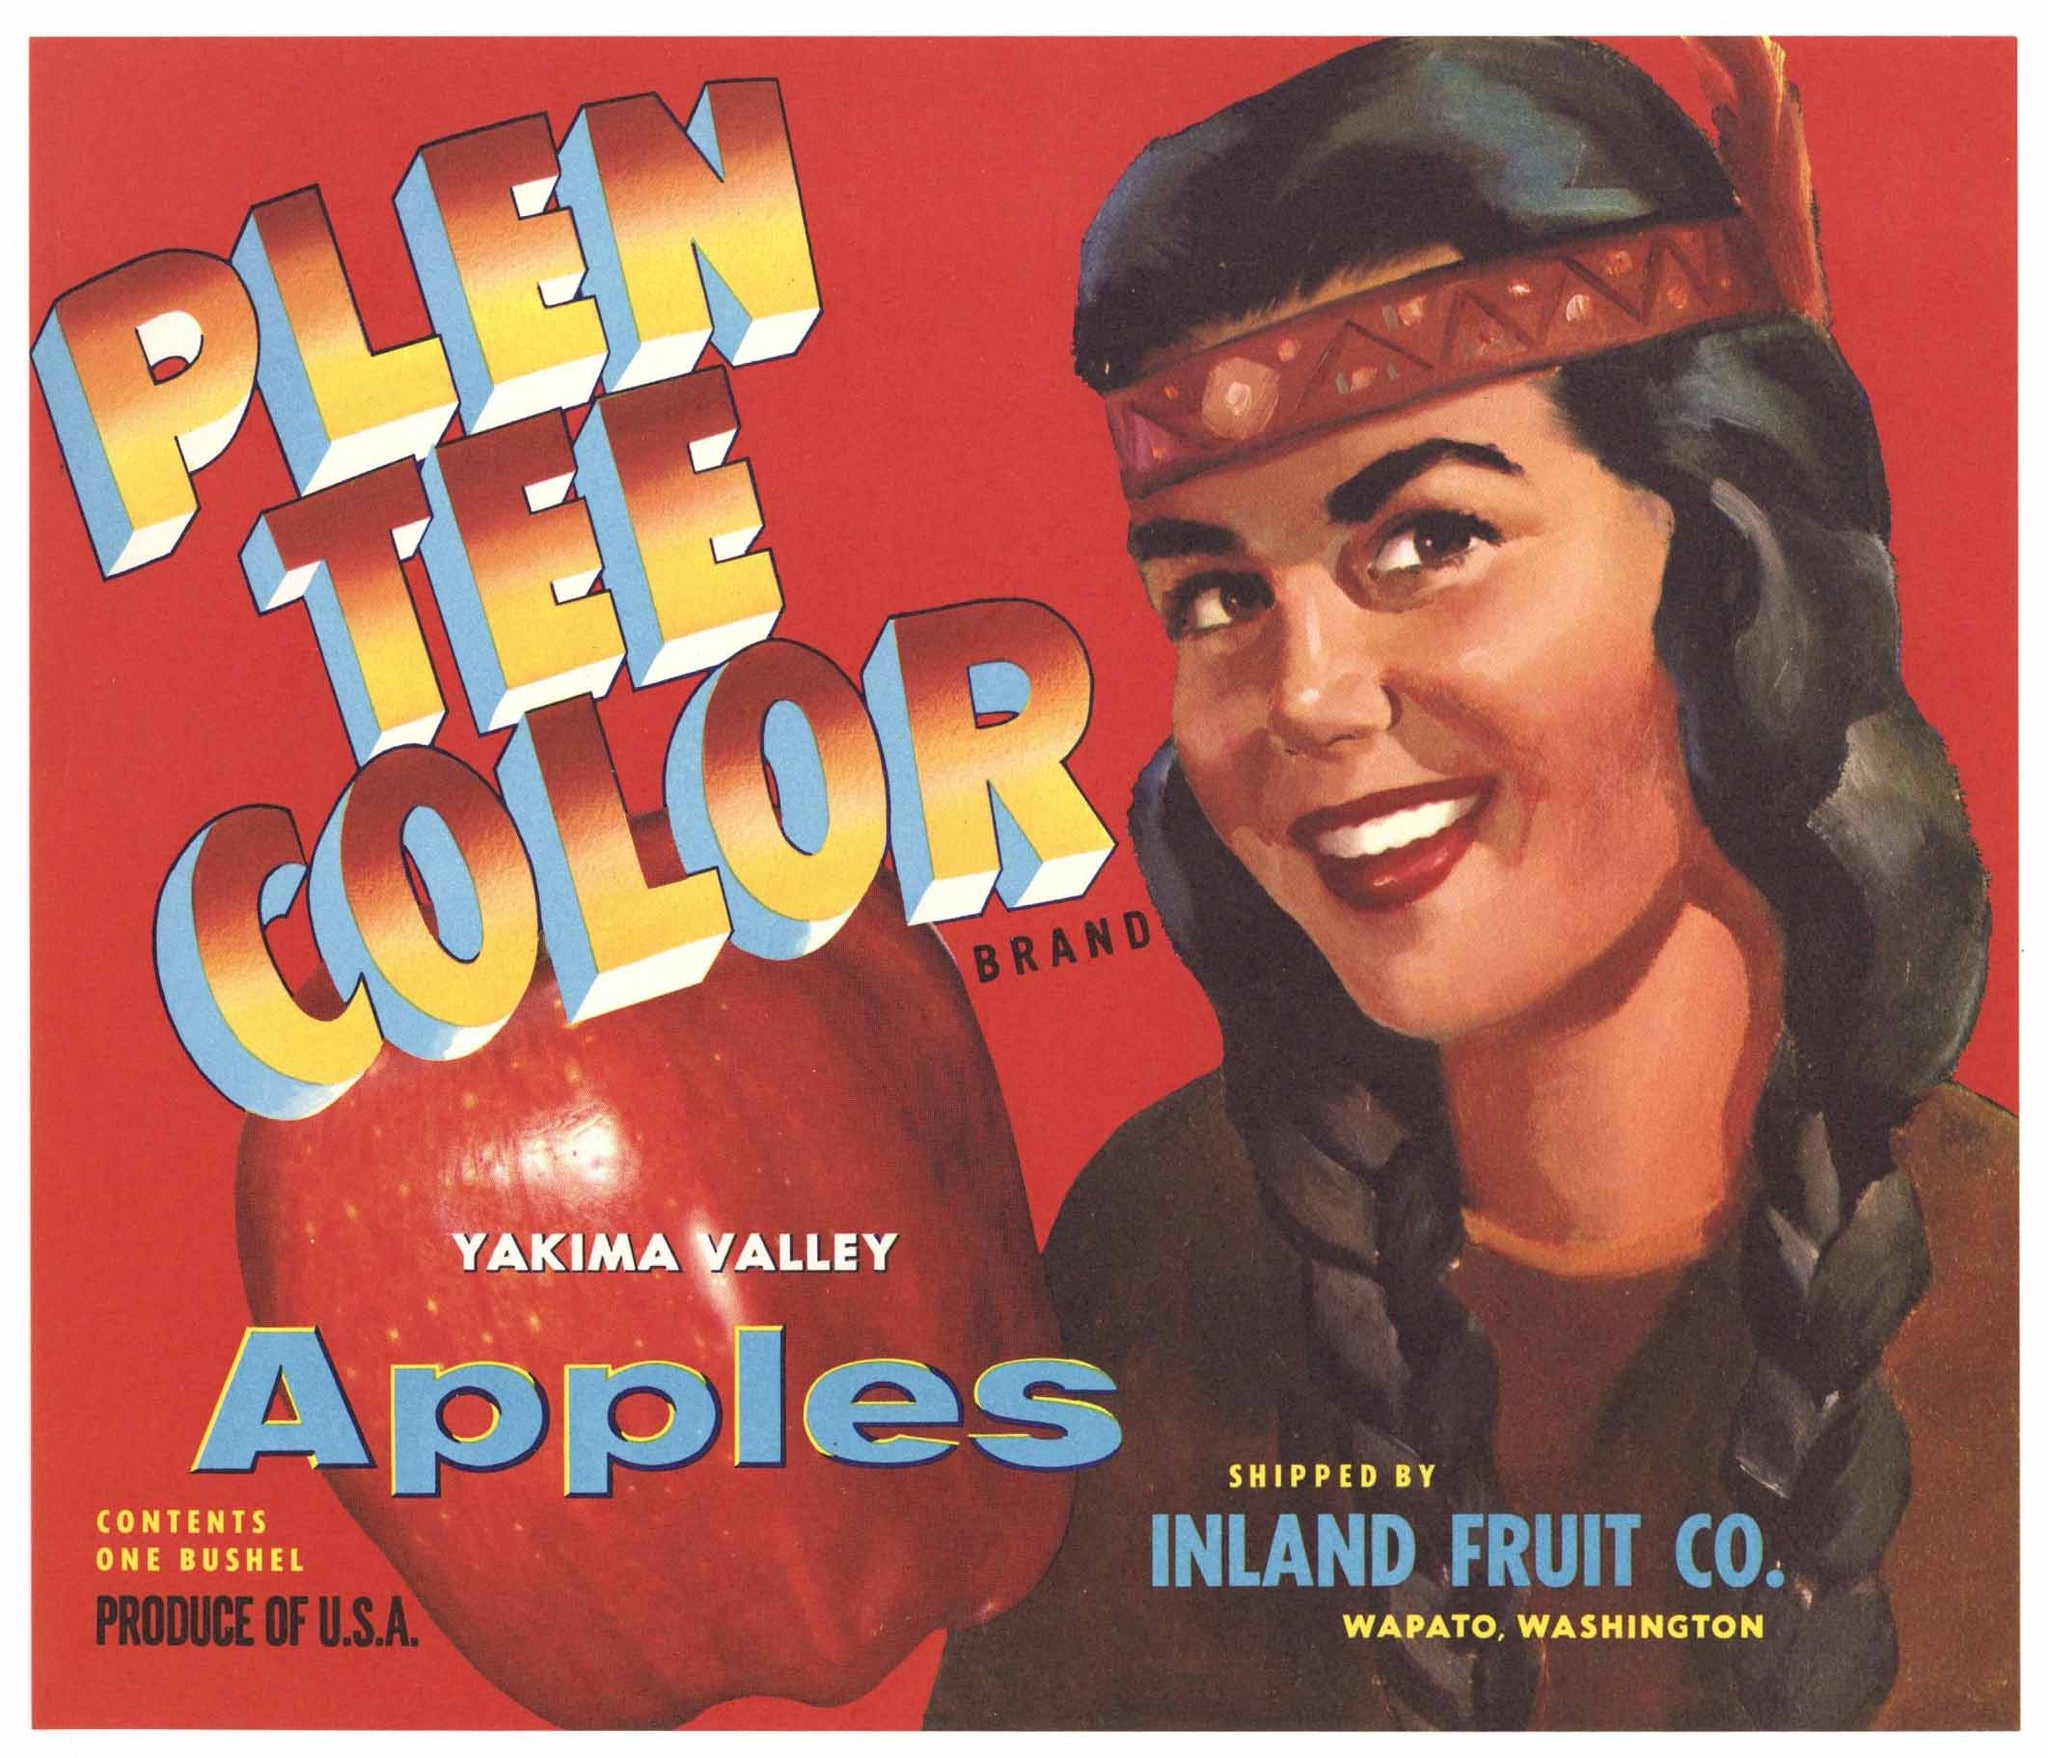 Plen Tee Color Brand Vintage Wapato Washington Apple Crate Label, red